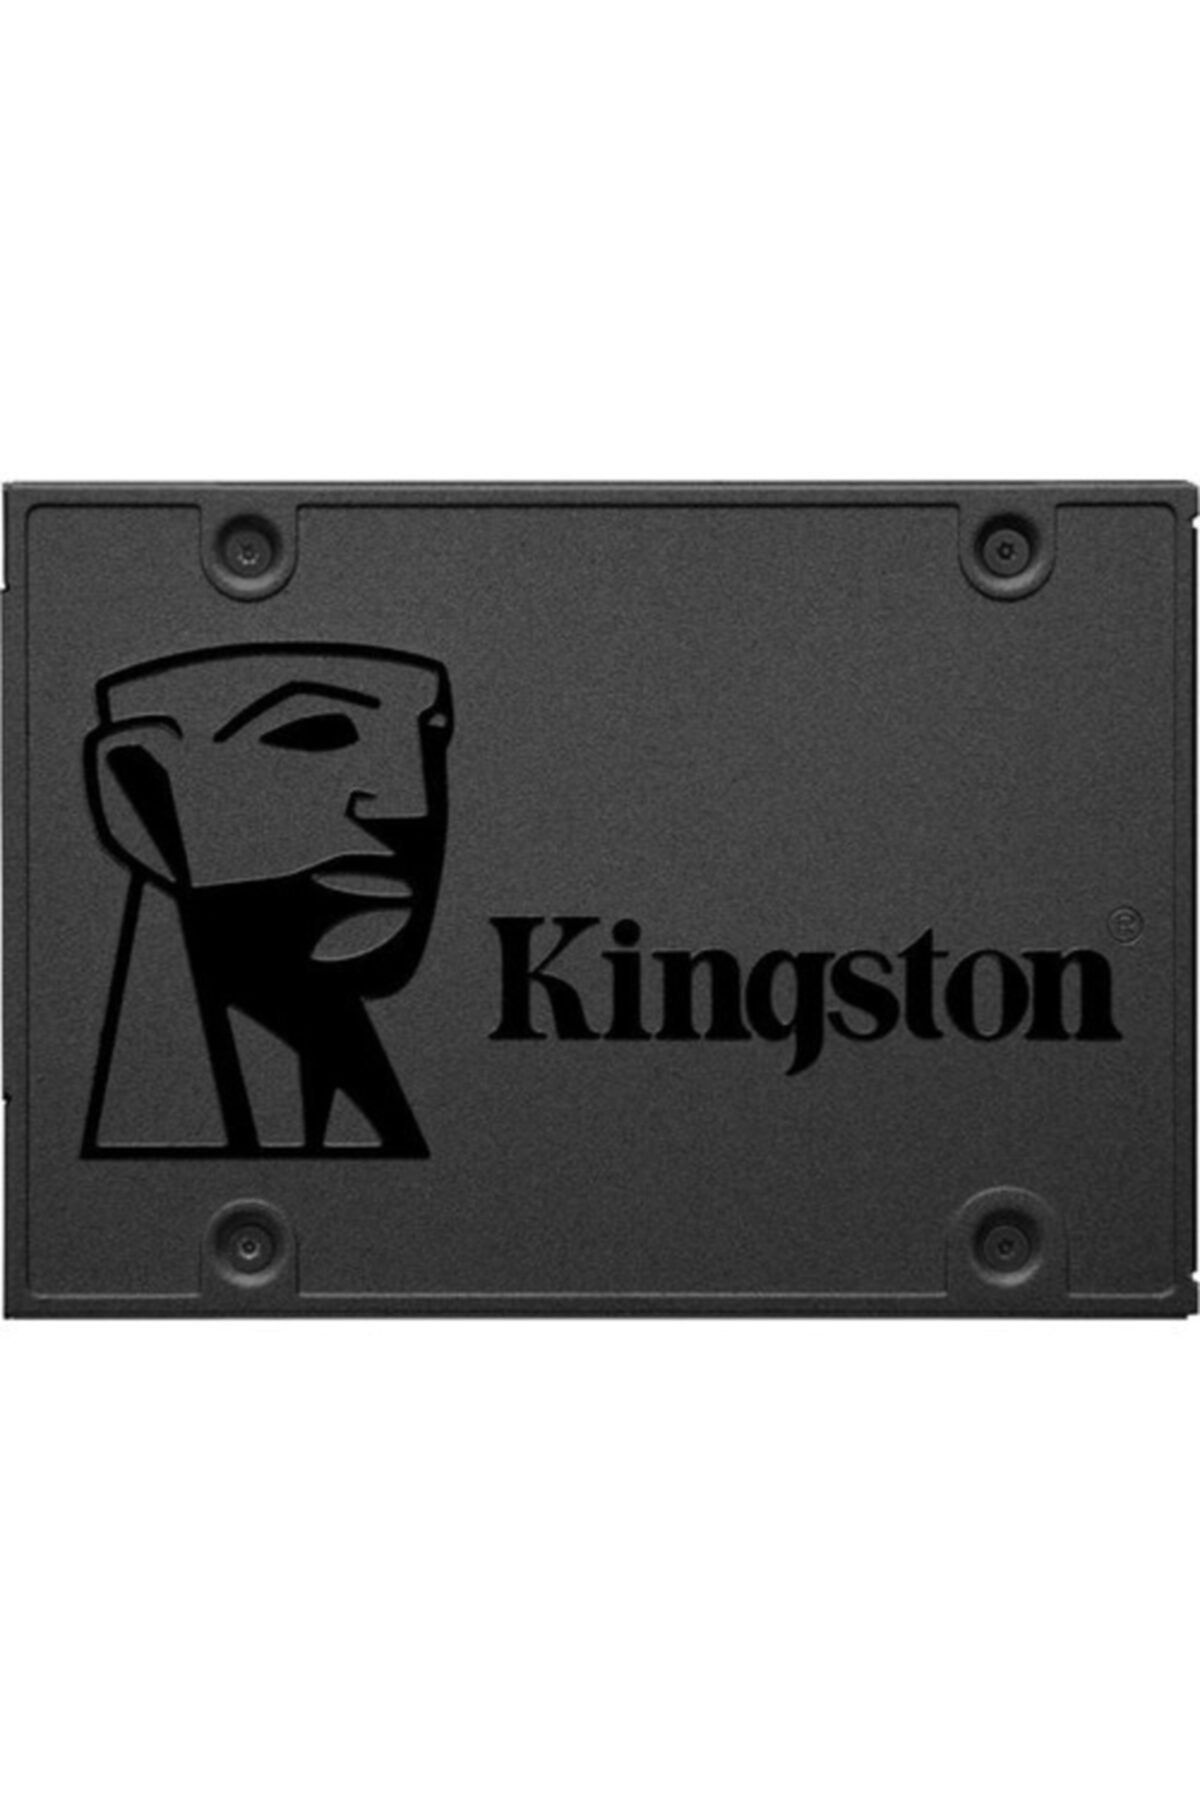 Kingston A400 Ssdnow 120gb 500mb-320mb/s Sata3 2.5 Ssd Sa400s37/120g